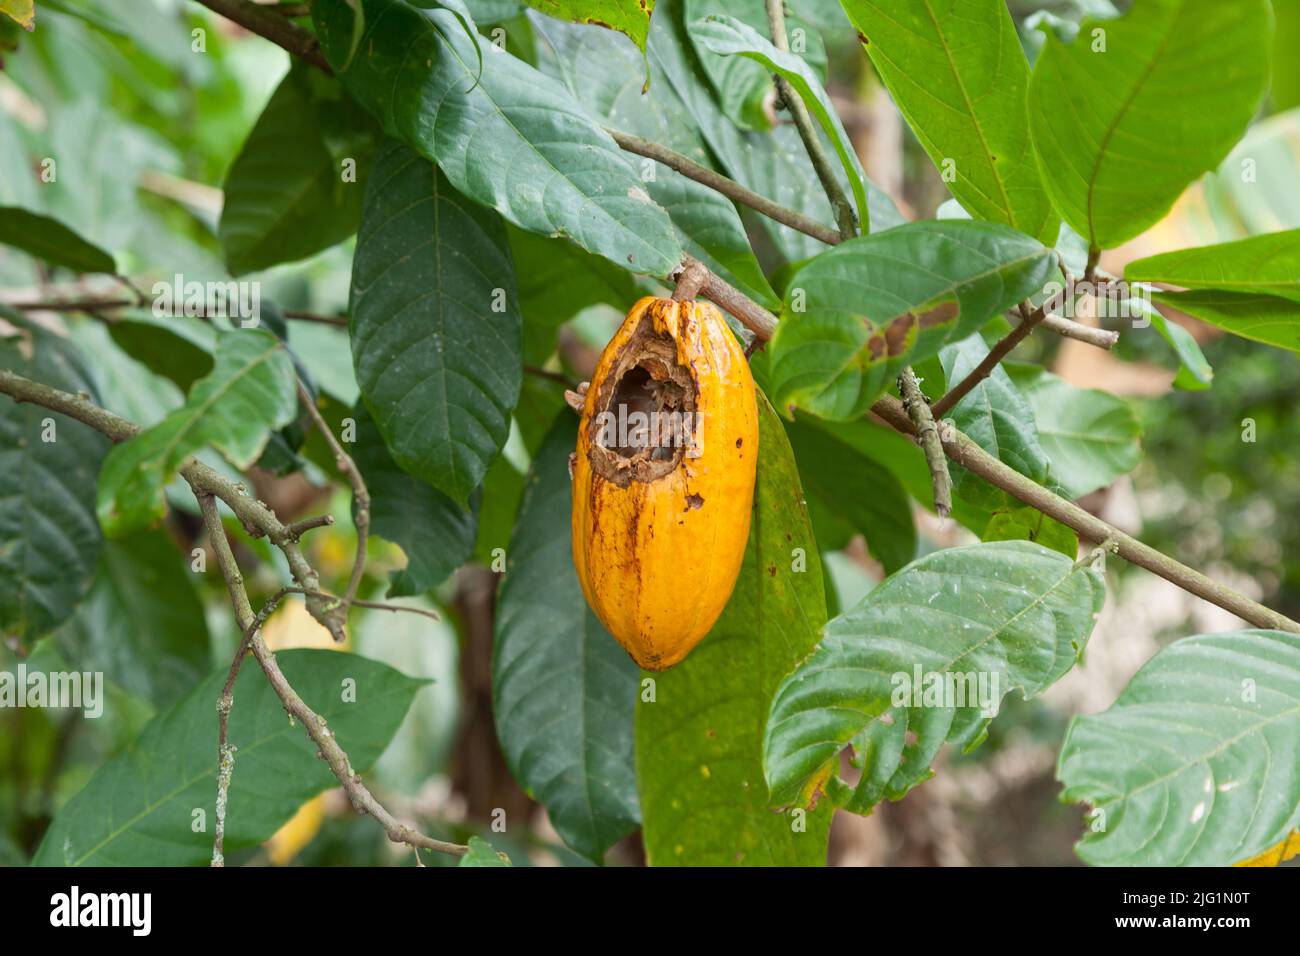 Theobroma cacao; plante de cacao avec fruits infectés. Banque D'Images